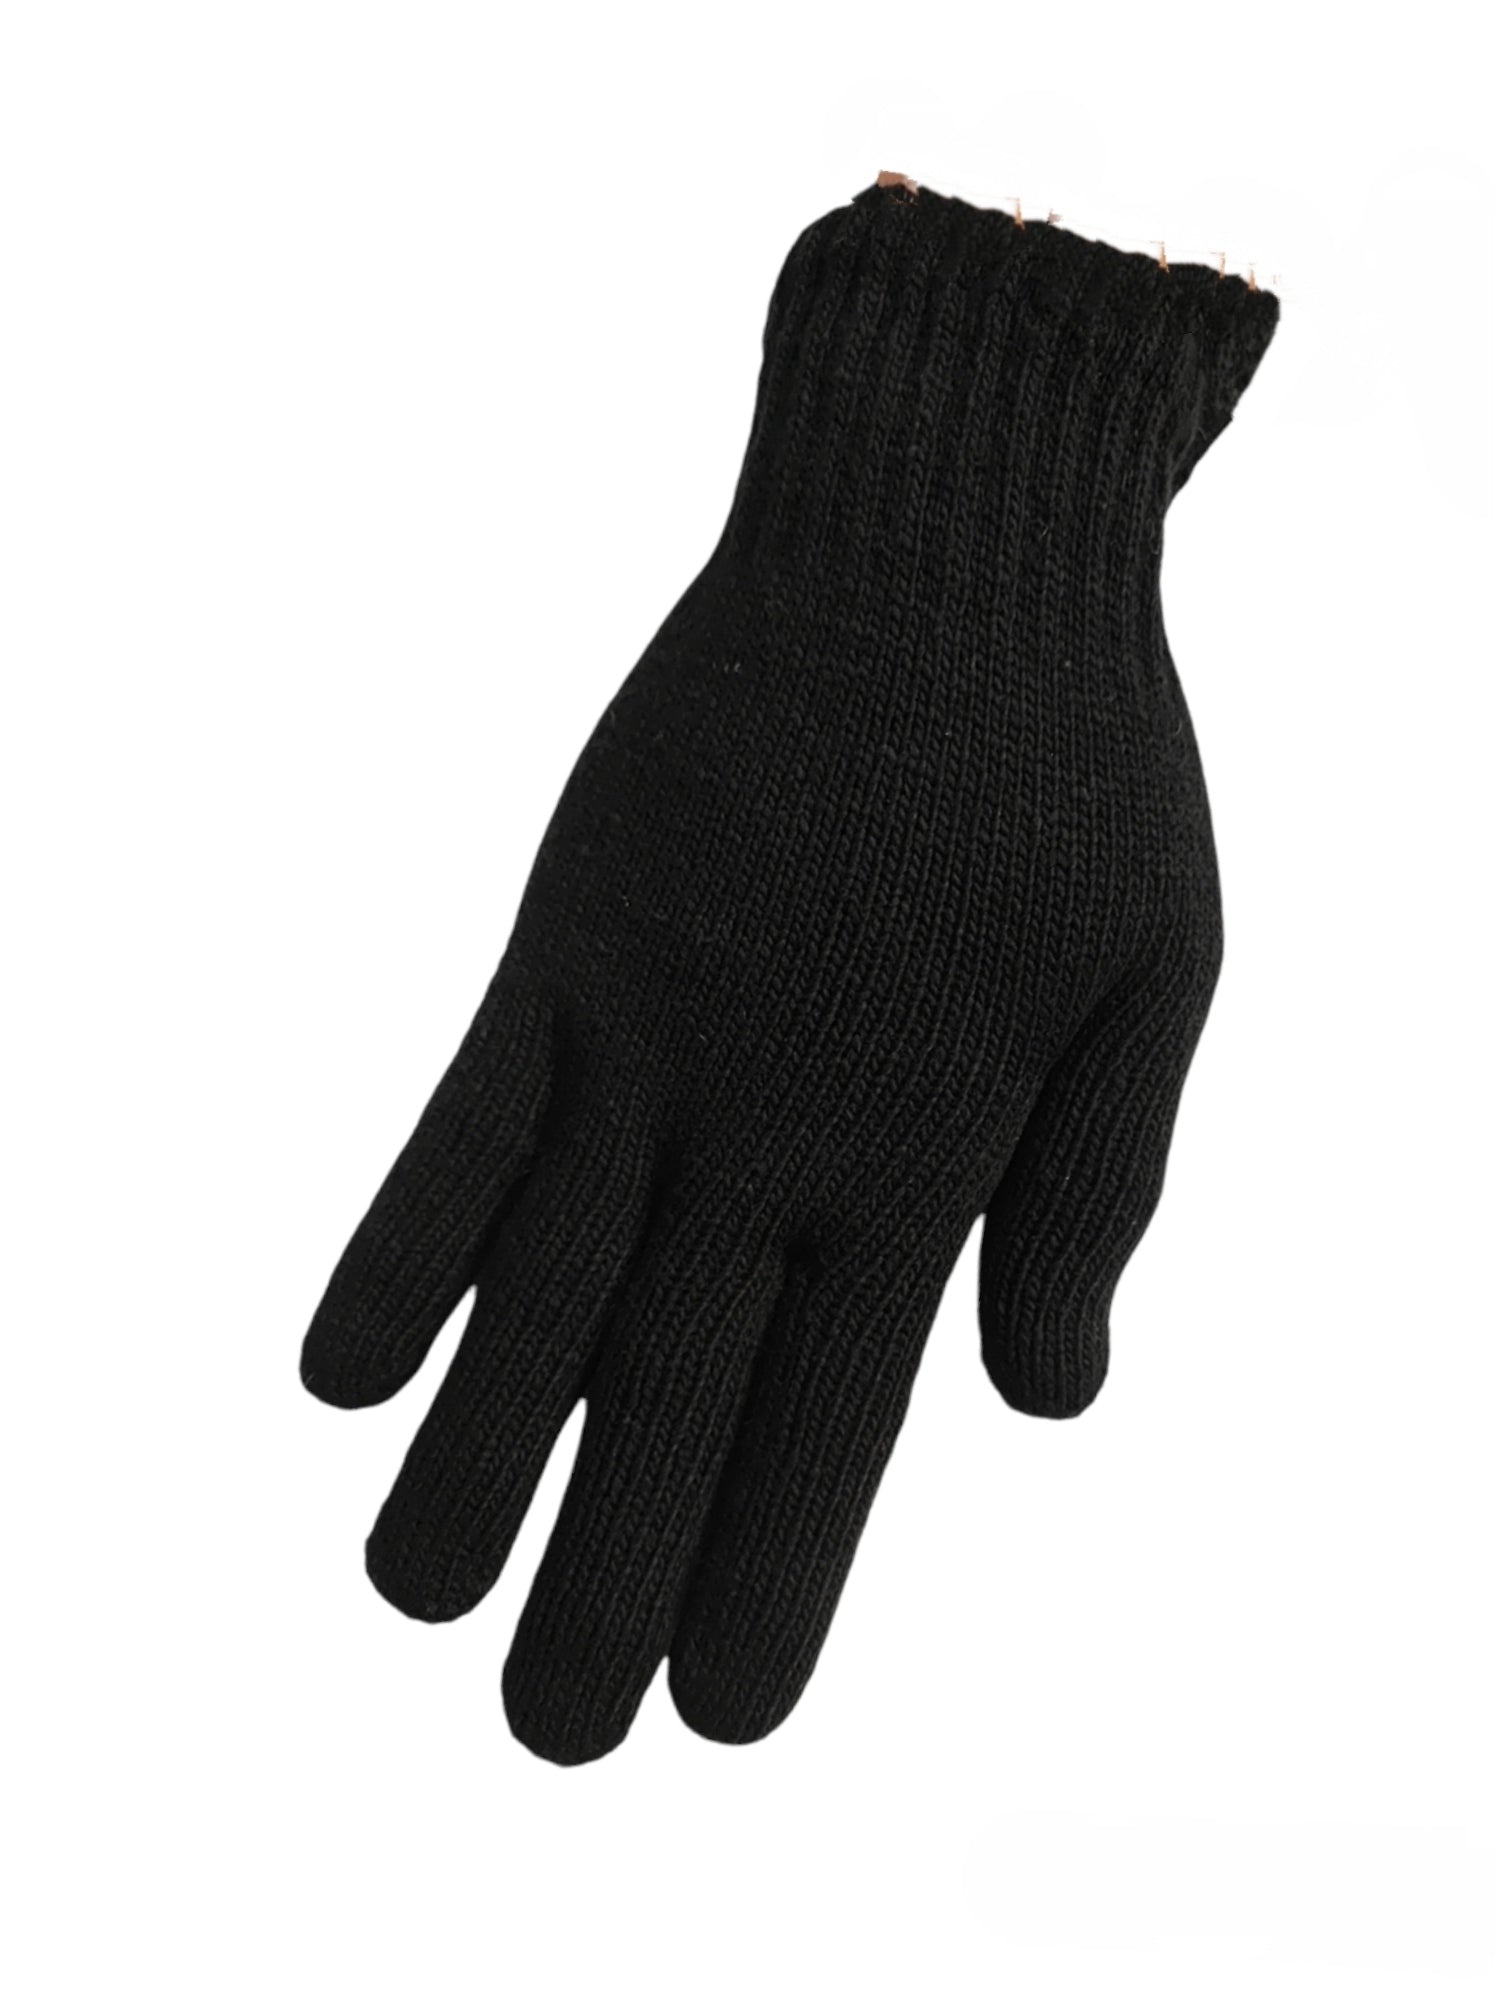 Simple black men's gloves #5 (x12)